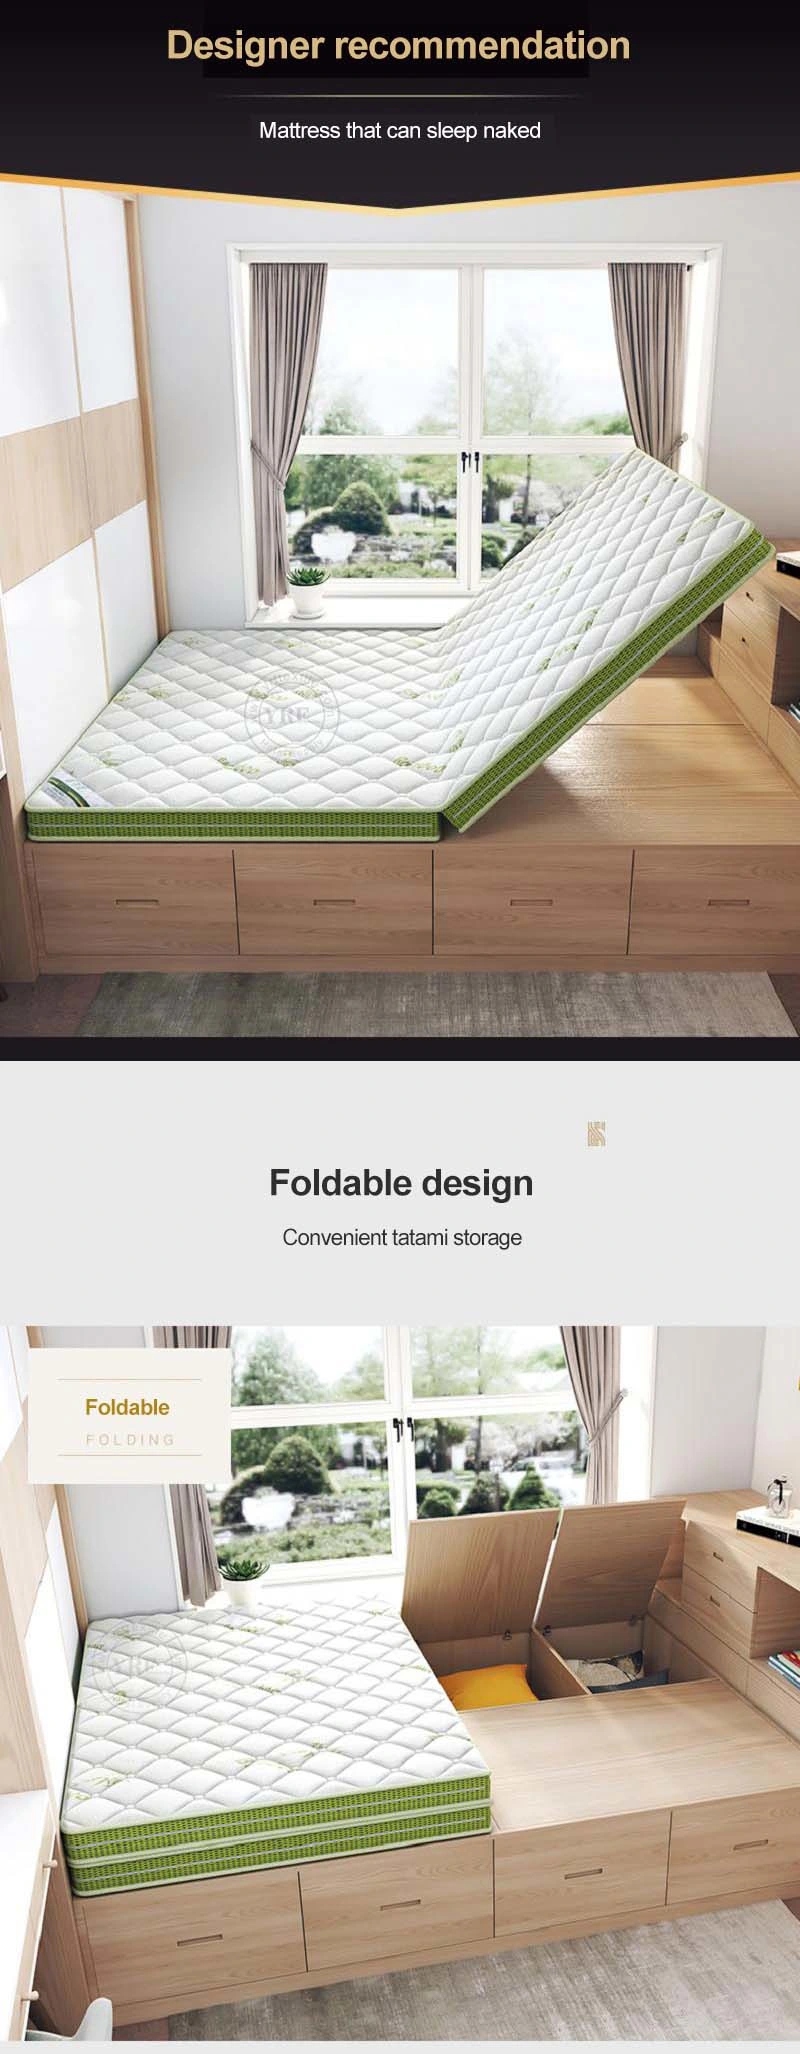 Home Foam Sleeping Tatami Double Foldable Detachable Washable 12cm Single Bed